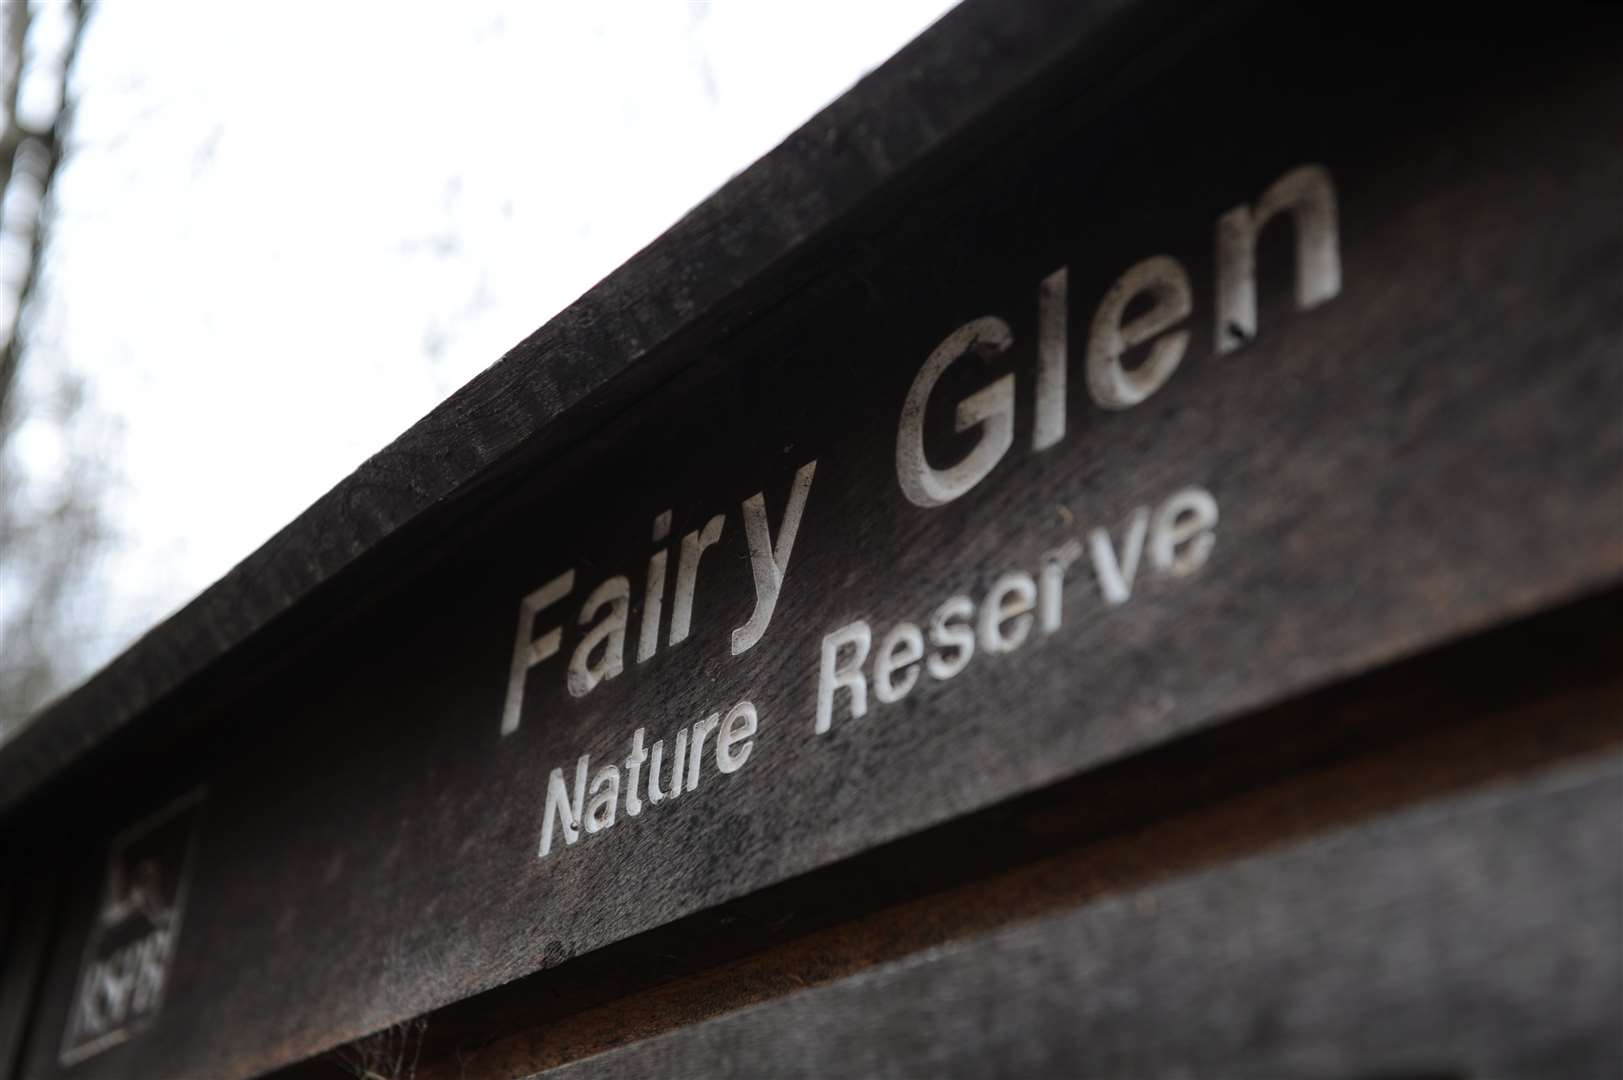 The Fairy Glen.